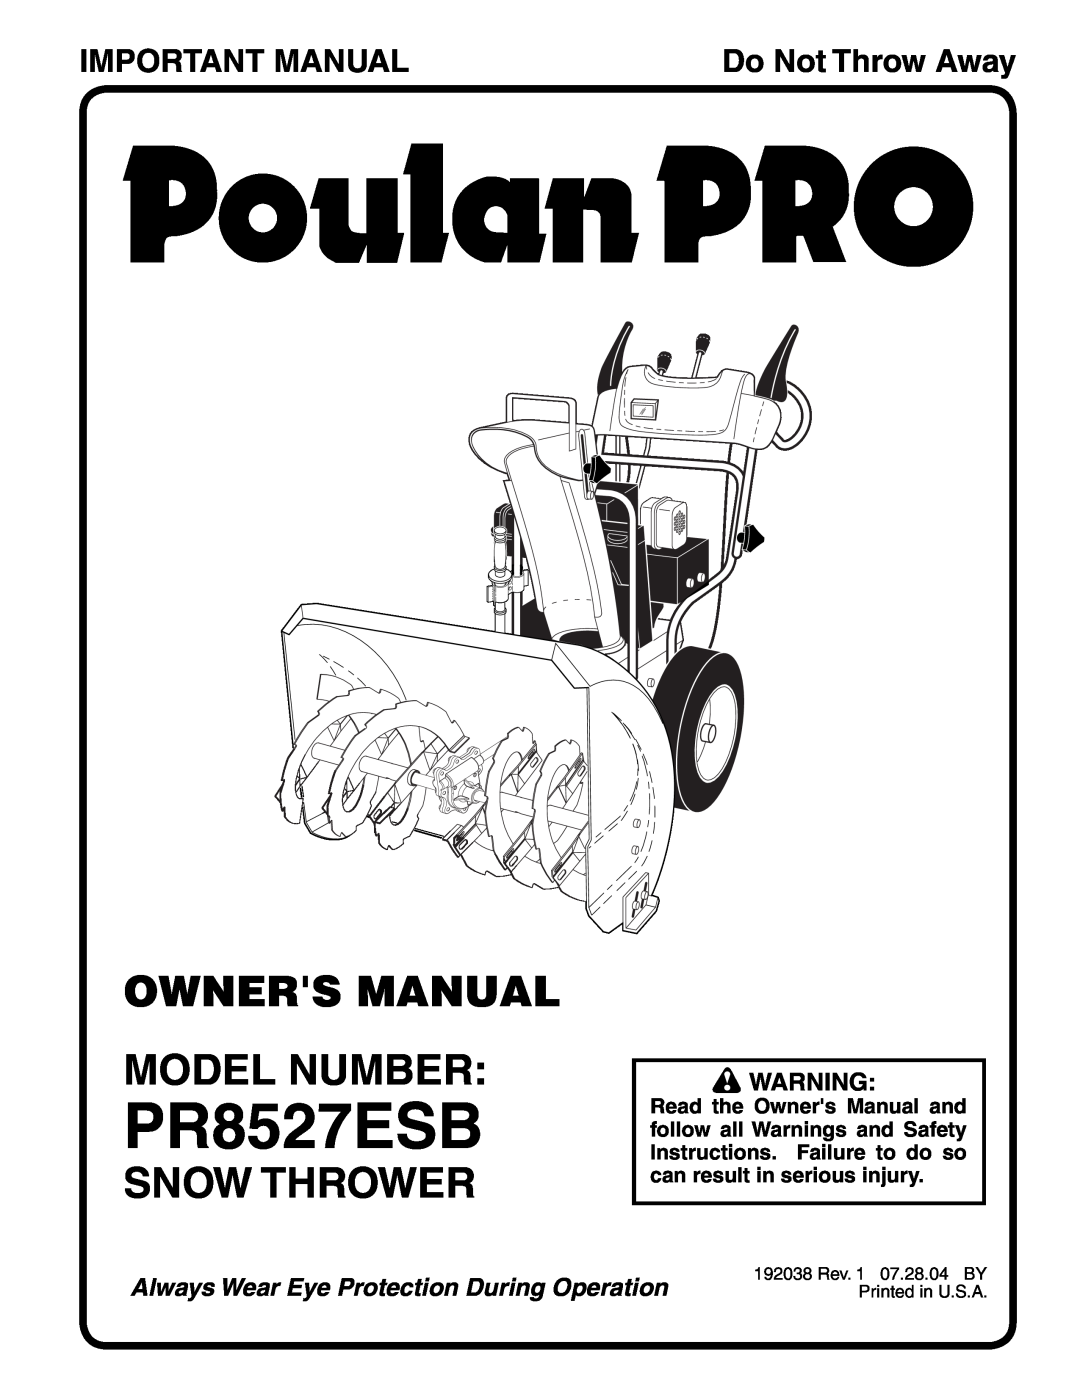 Poulan 192038 owner manual Snow Thrower, Important Manual, PR8527ESB, Do Not Throw Away 